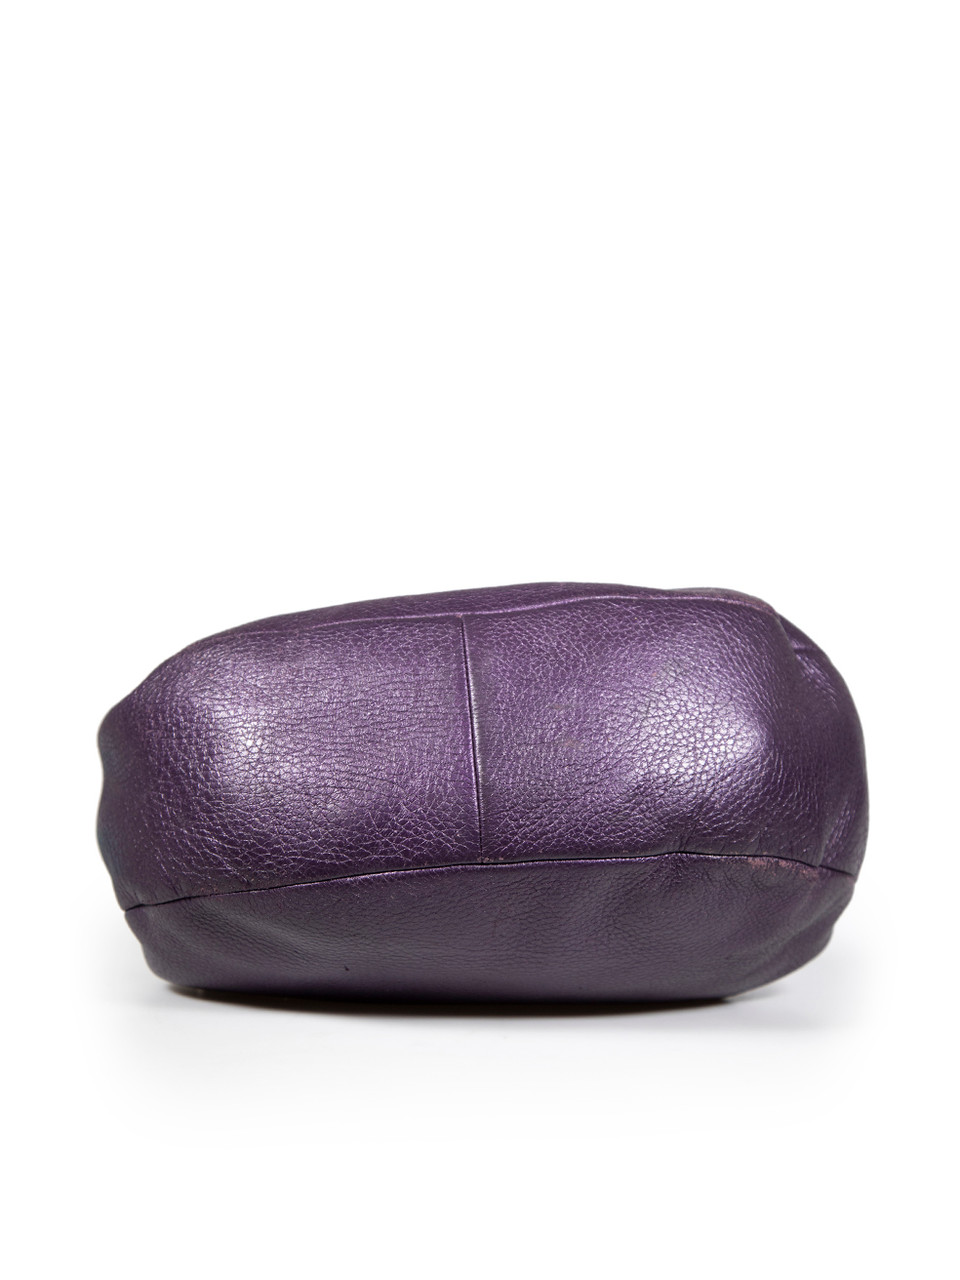 Jimmy Choo Purple Leather Ring Top Handle Bag